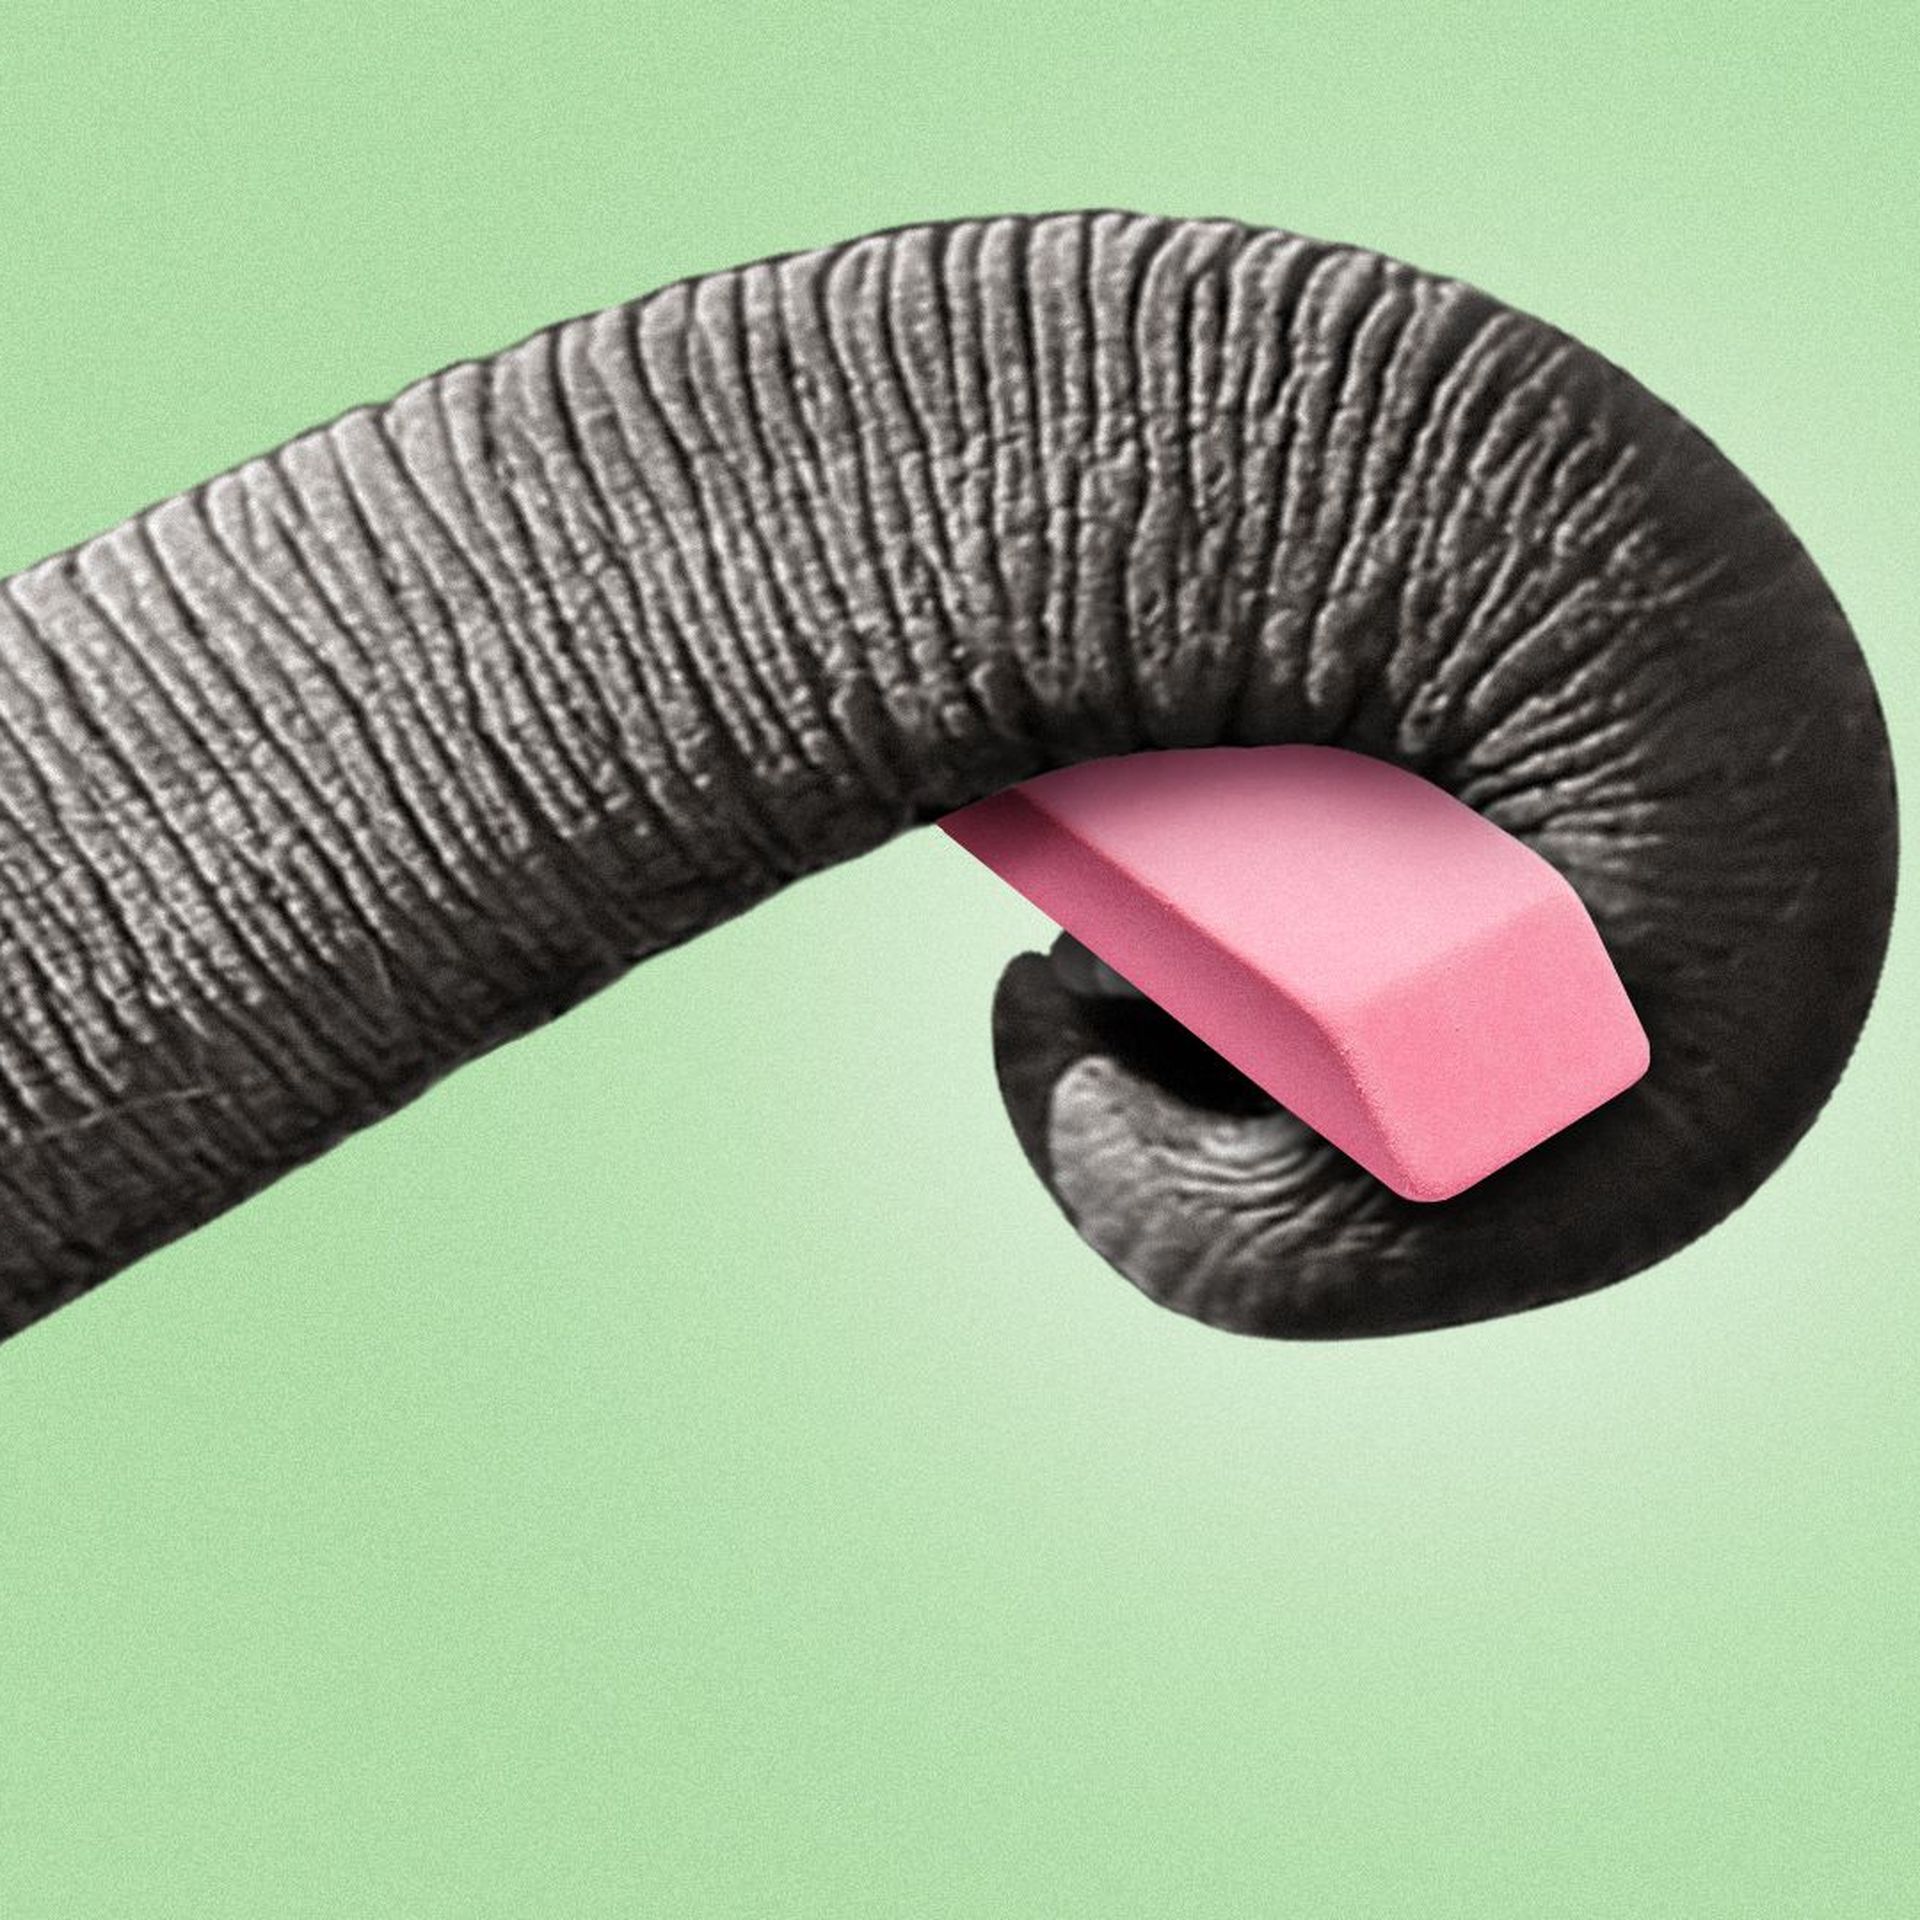 Illustration of an elephant trunk holding a pink rubber eraser.